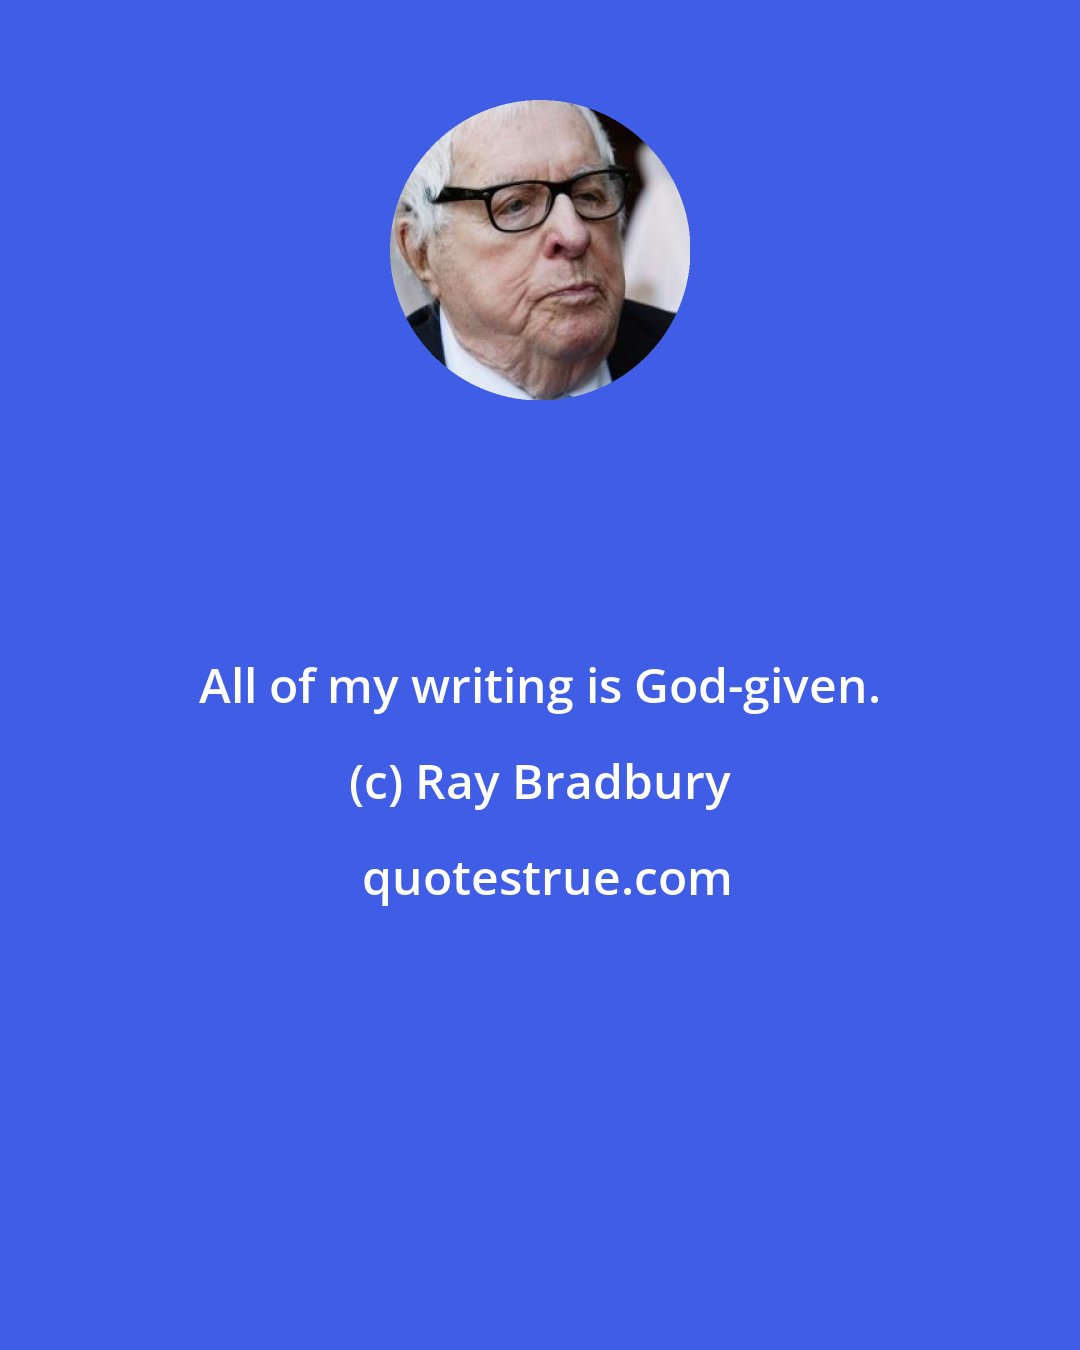 Ray Bradbury: All of my writing is God-given.